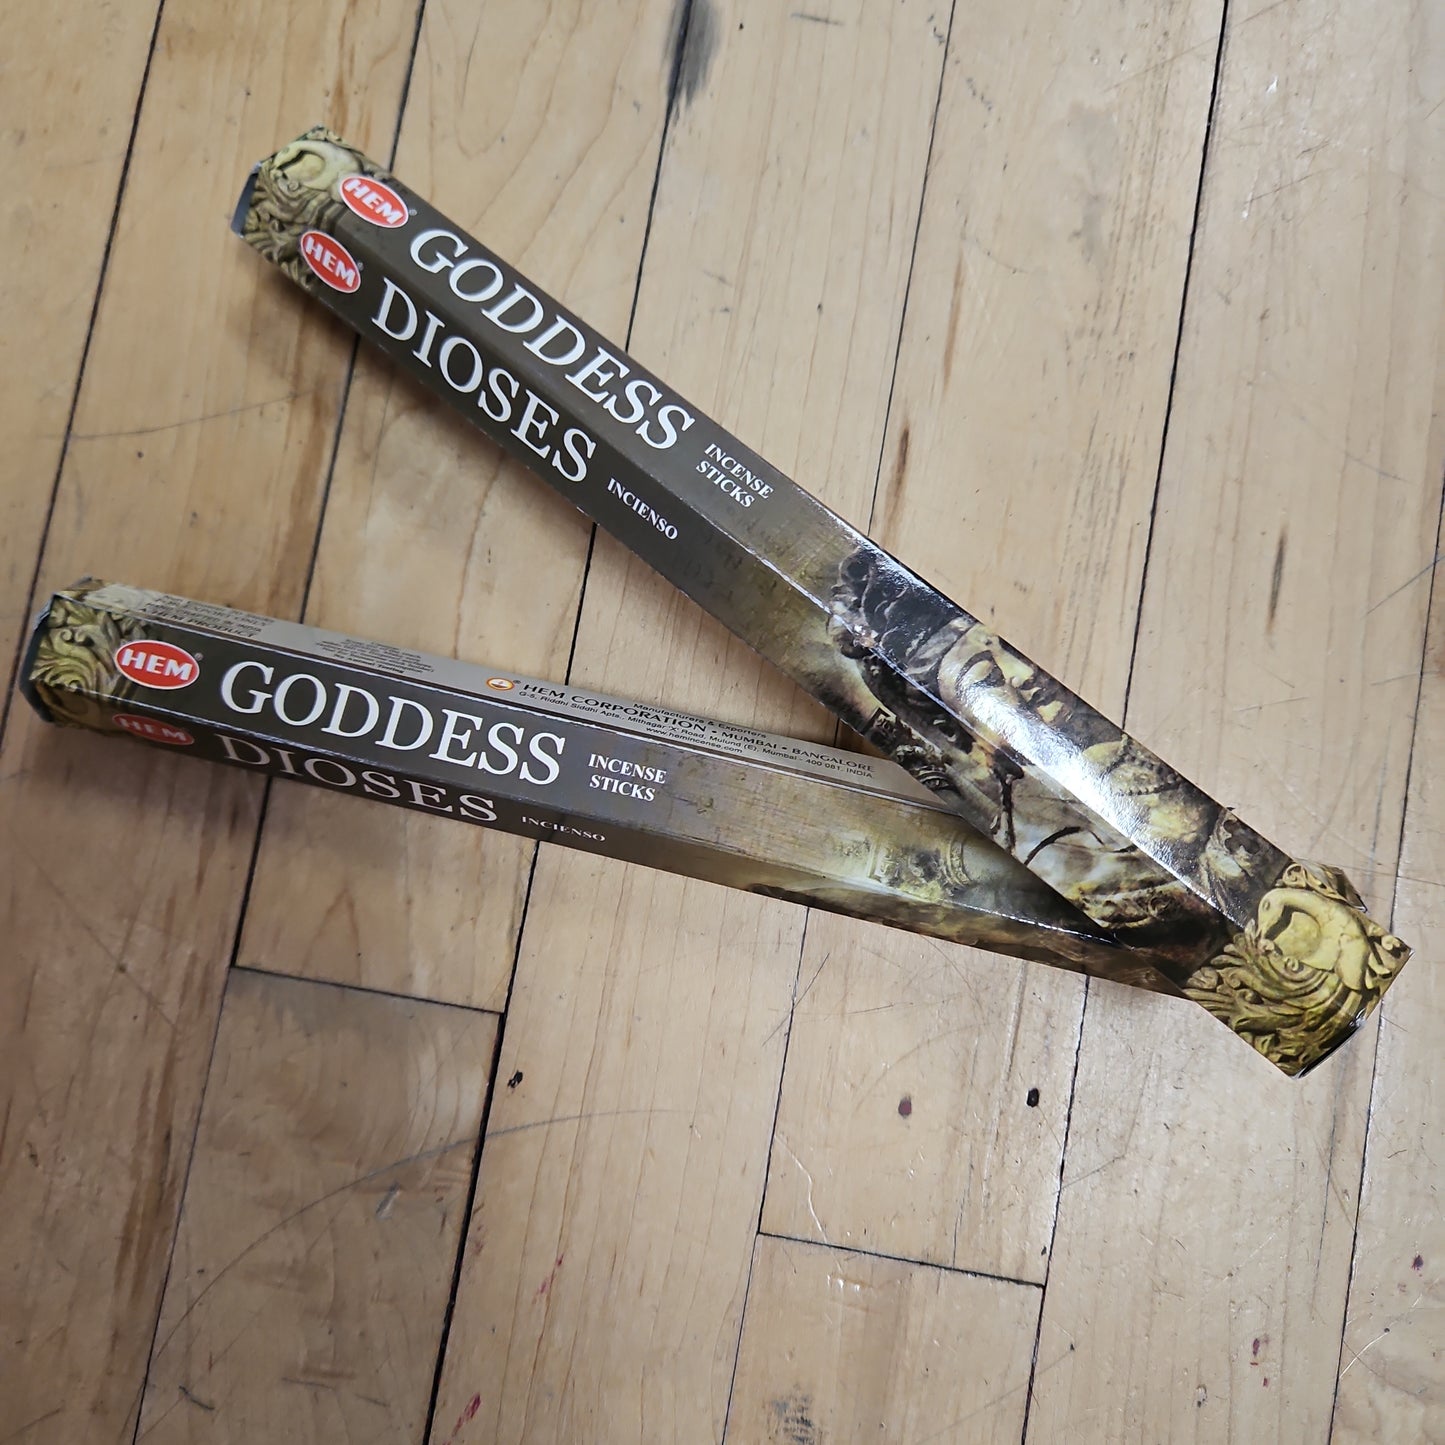 HEM Goddess Incense Sticks - 20 Pack